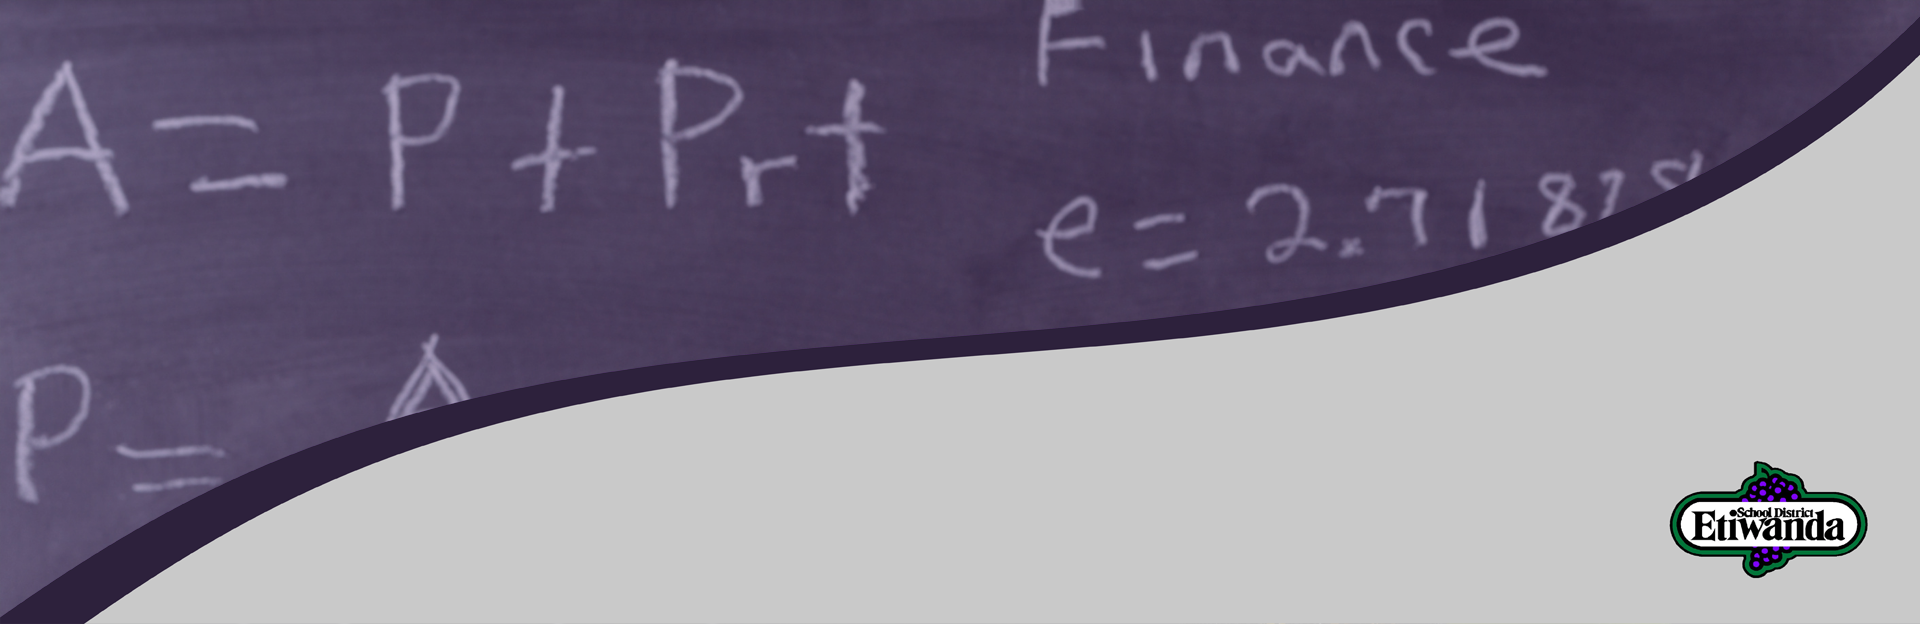 Etiwanda logo and  image of math equation on a chalkboard